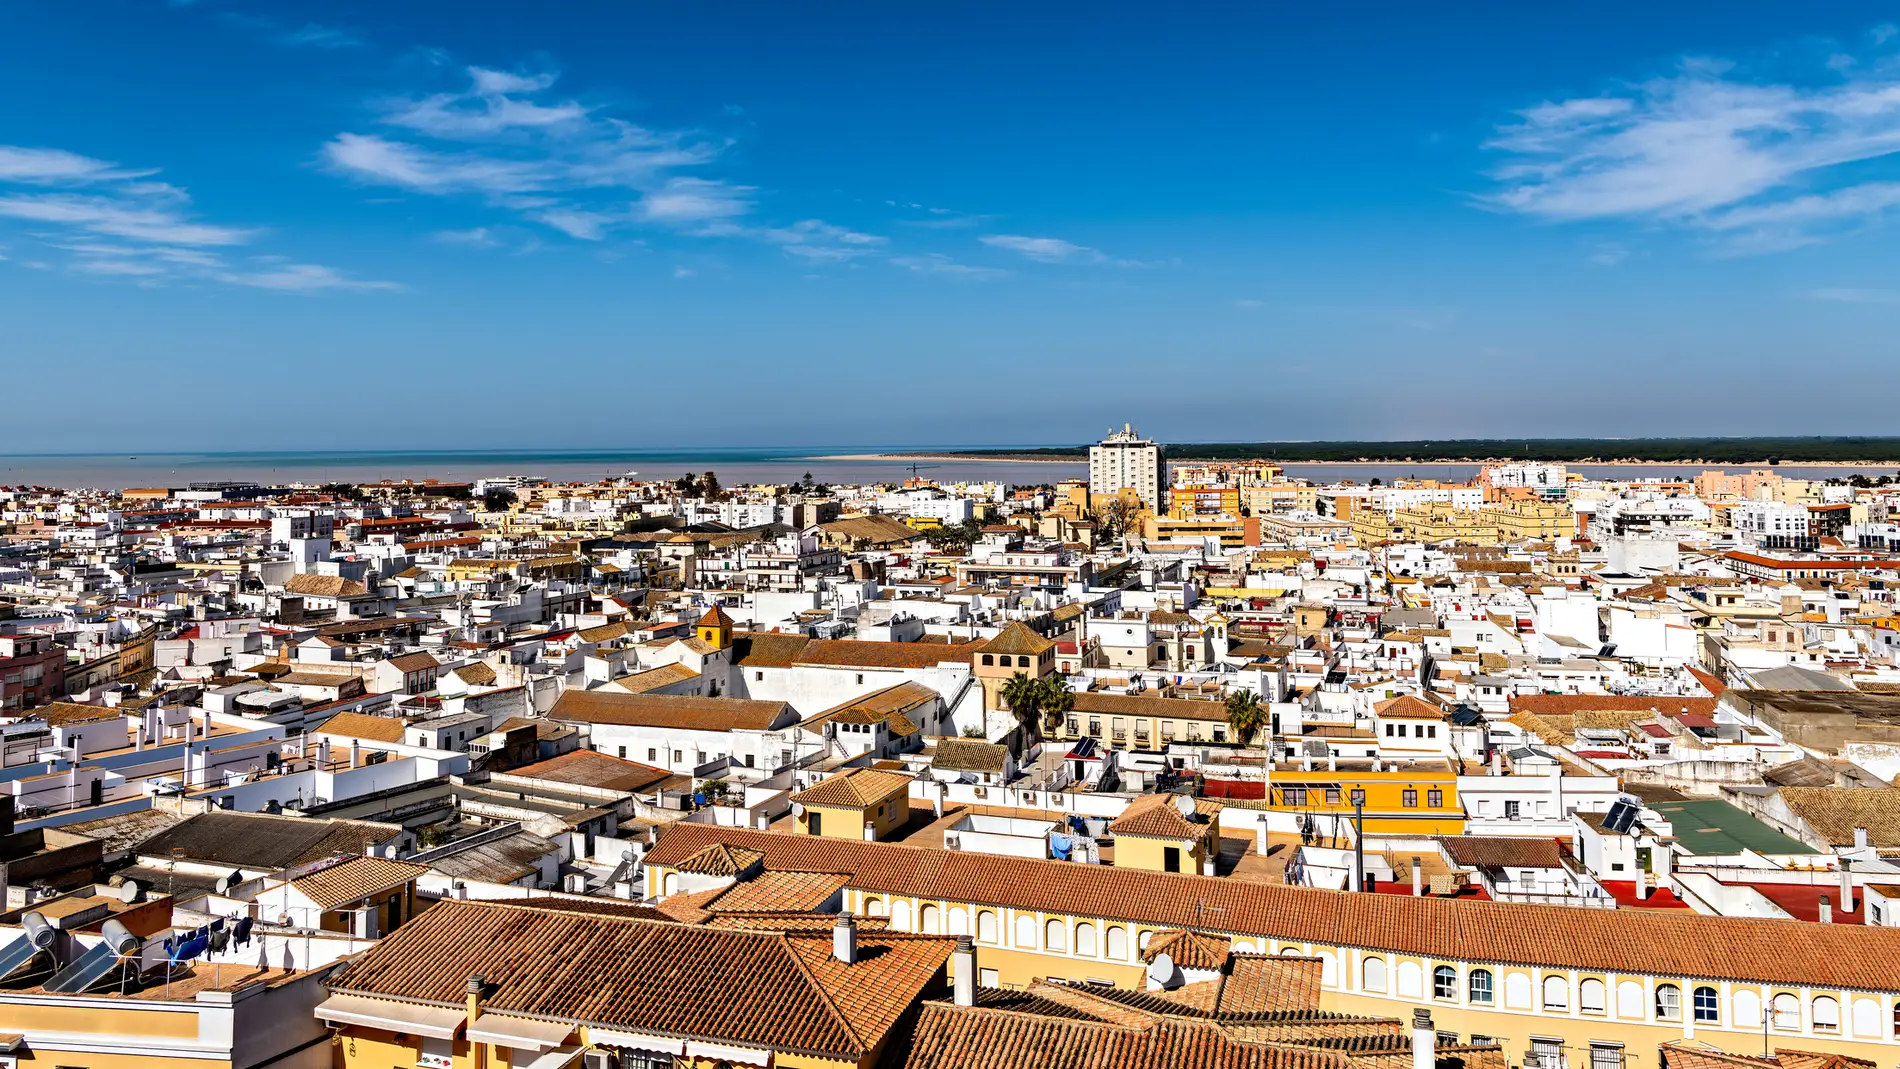 Sanlúcar de Barrameda (Cádiz)